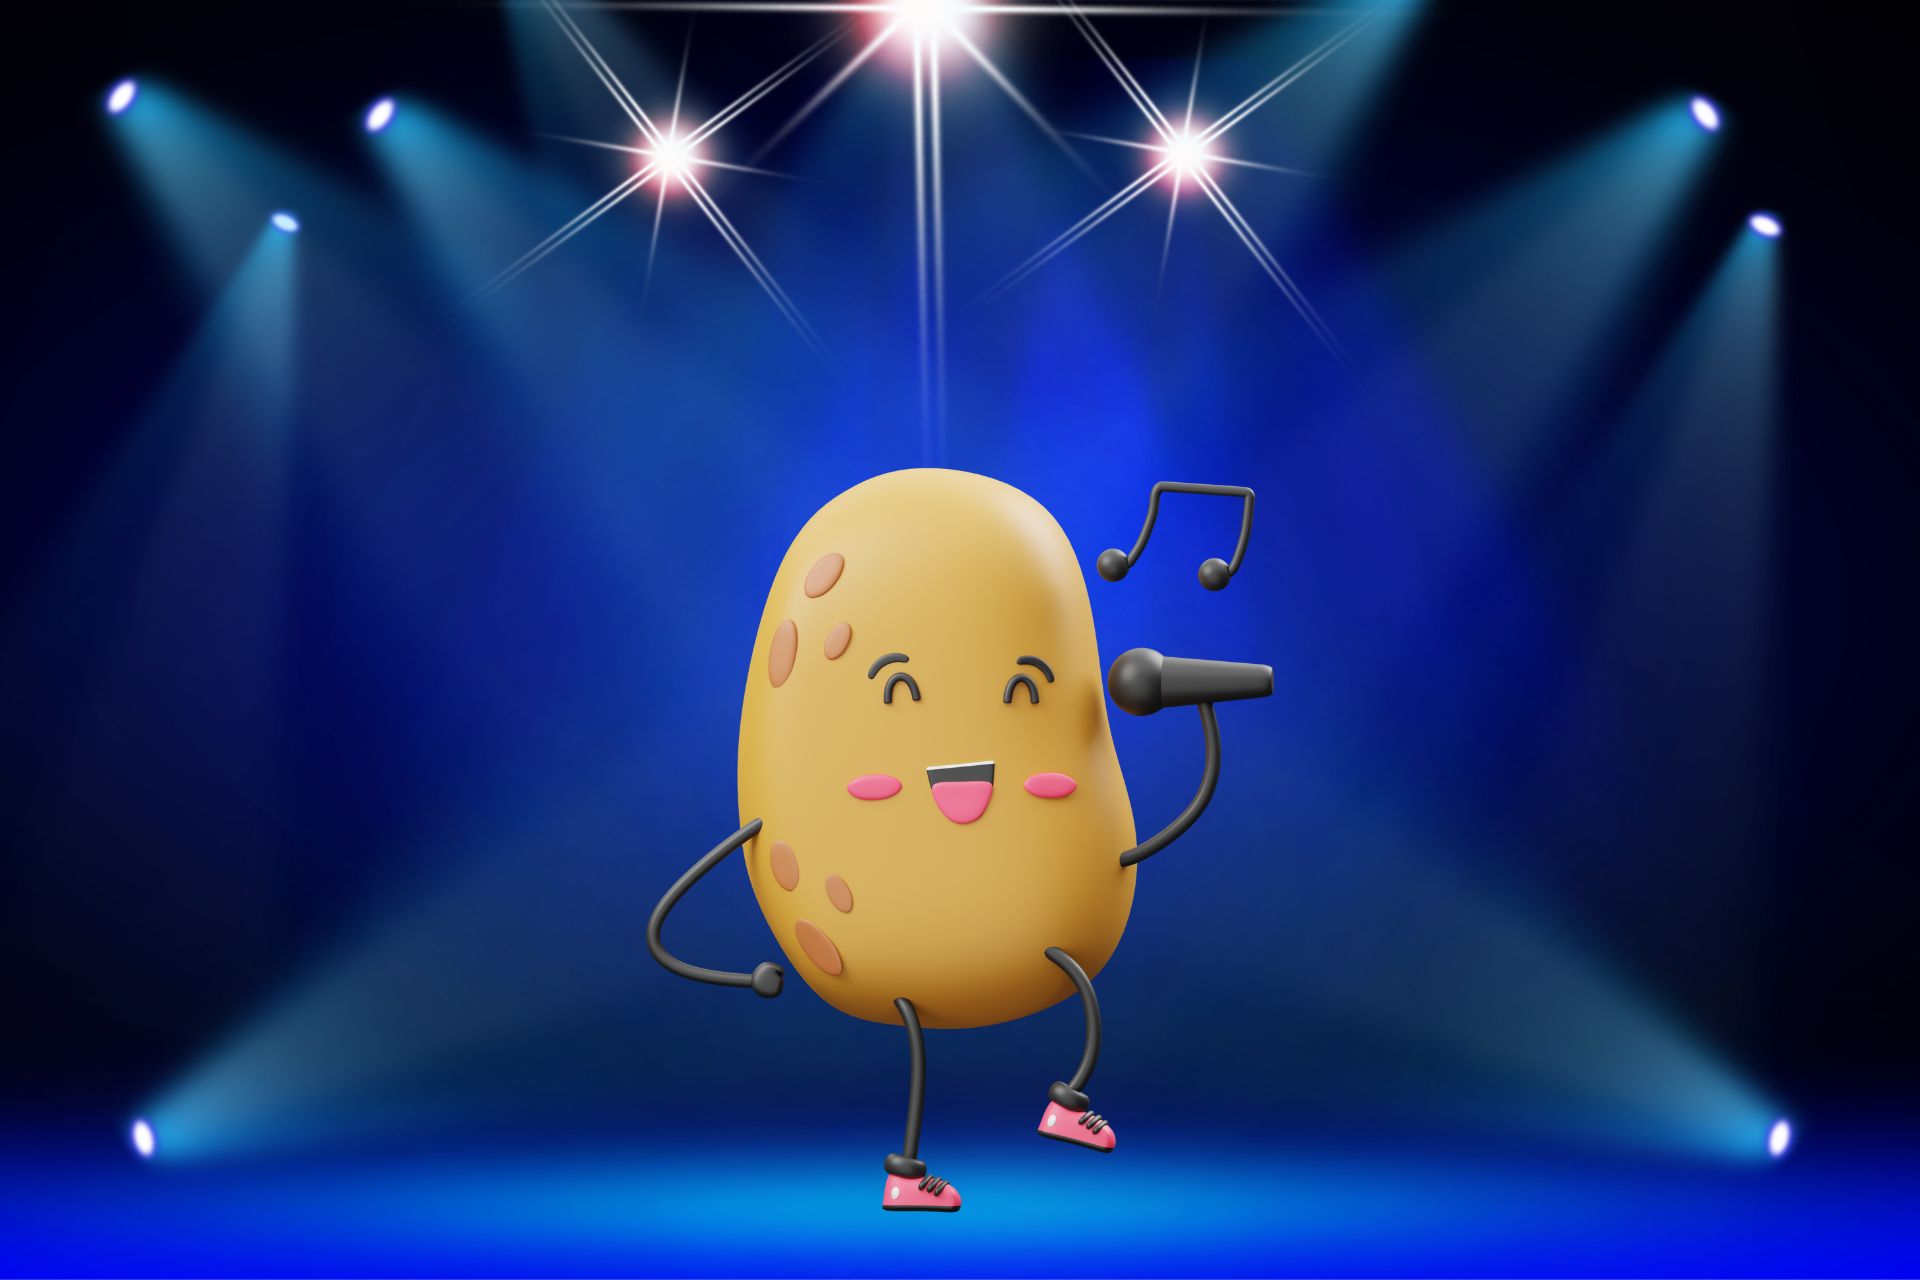 Potatoes in music